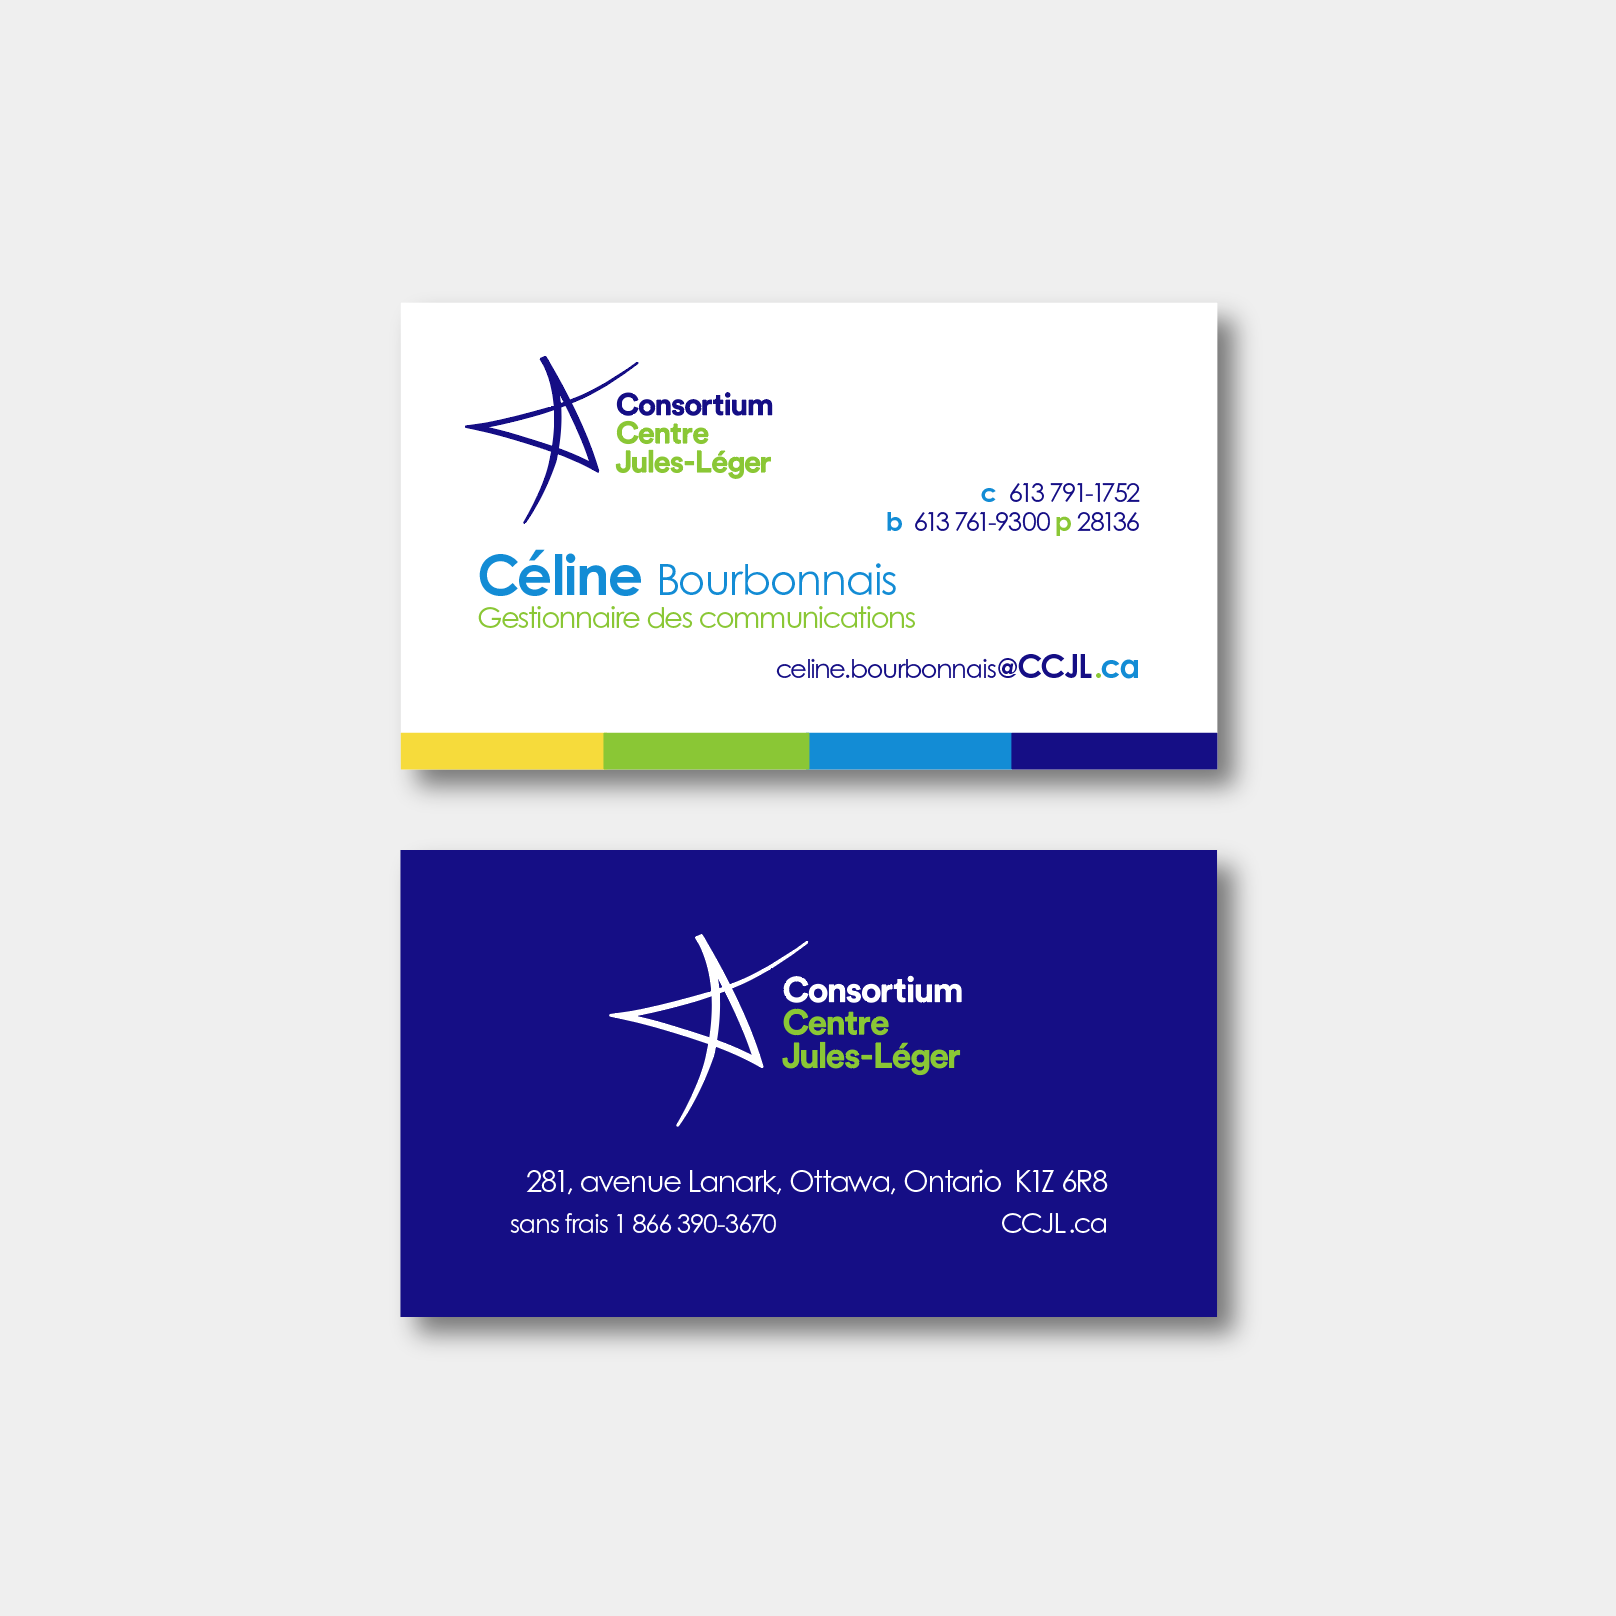 Consortium Centre Jules-Léger business card | Brand communications tool